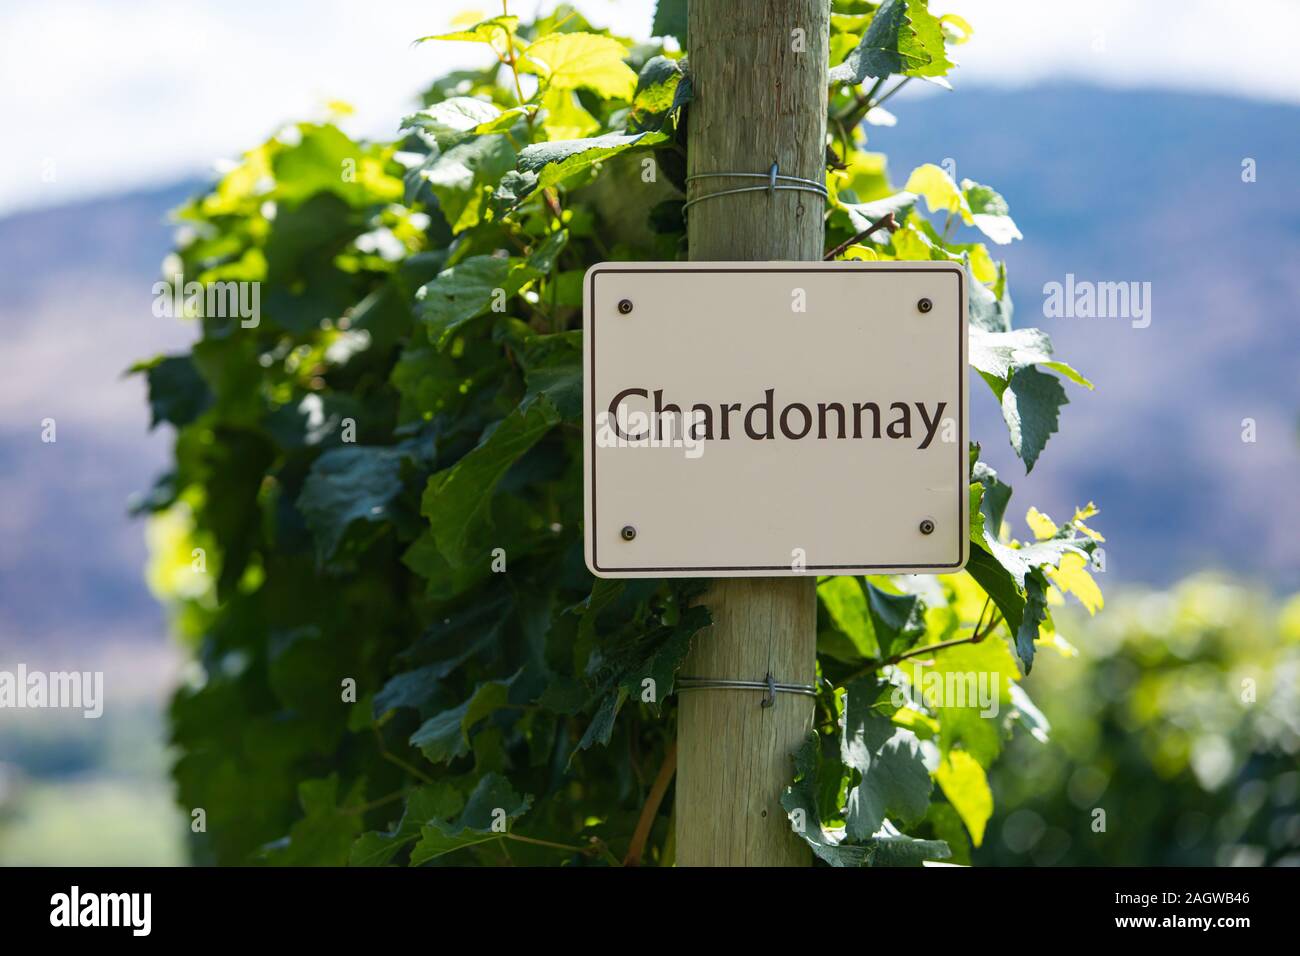 Chardonnay wine grape variety sign on wooden pole selective focus, vineyard varieties signs, Okanagan valley wine region British Columbia, Canada Stock Photo